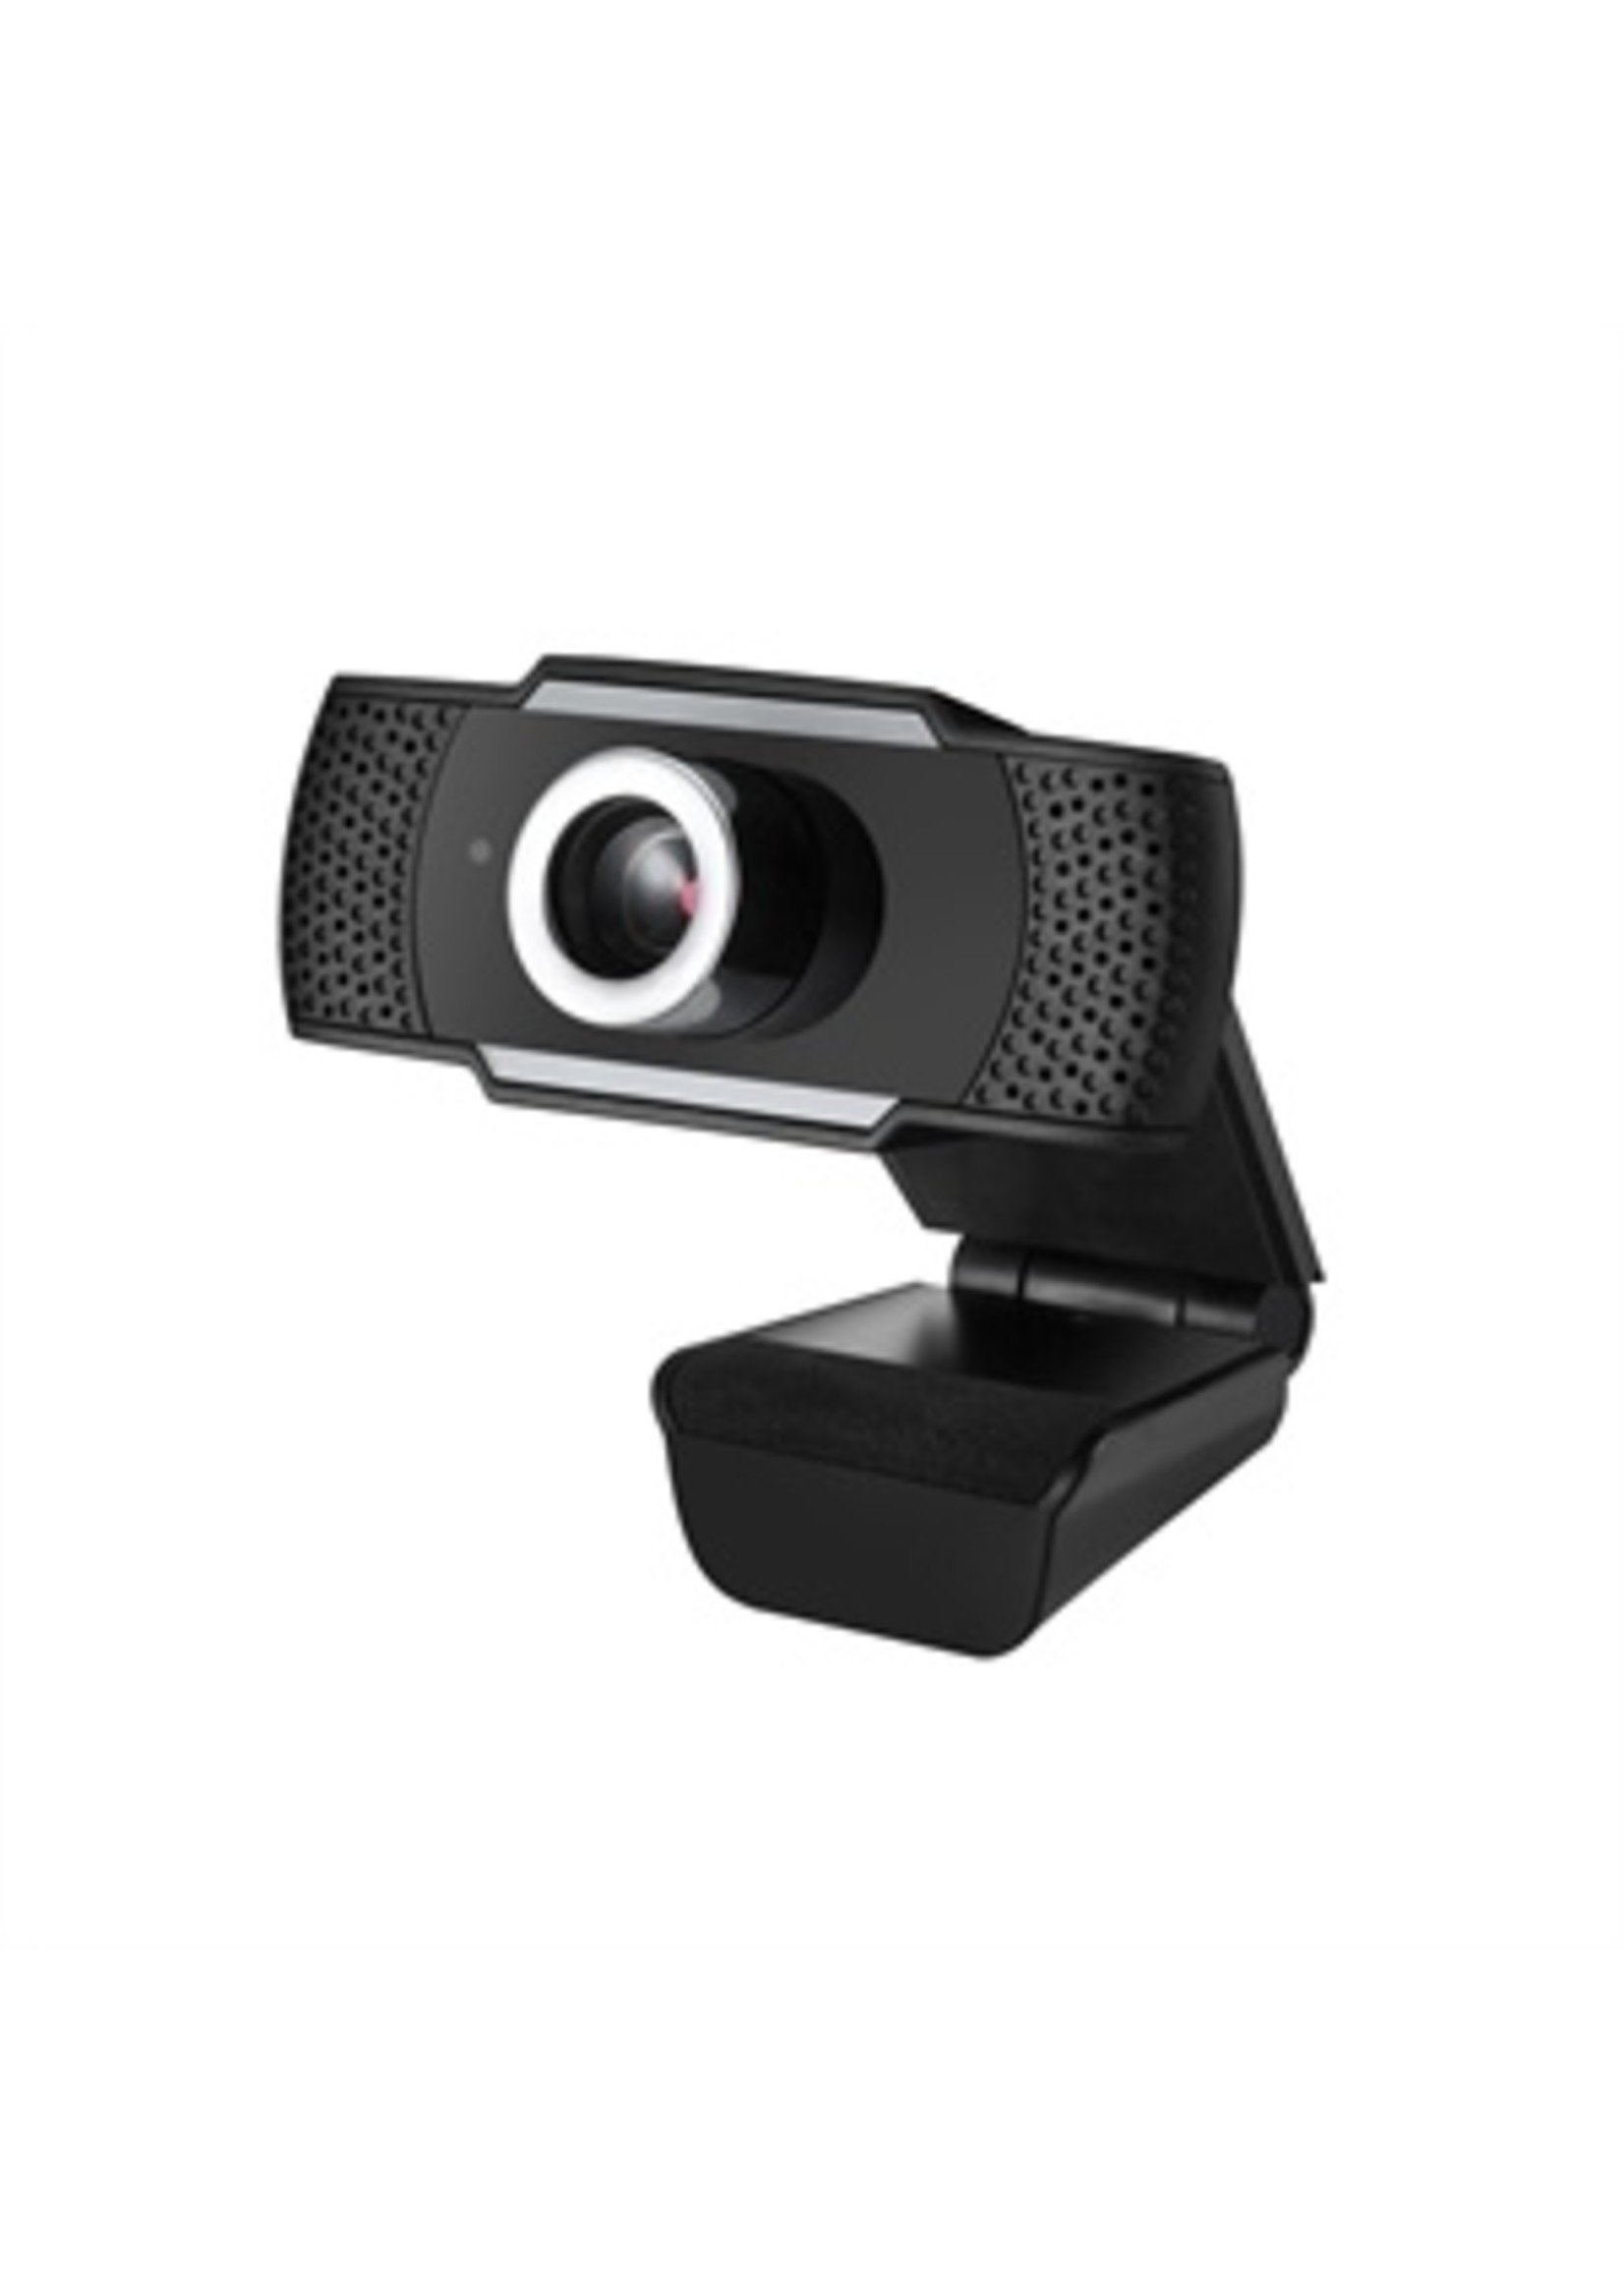 Adesso CyberTrack H4 1080P USB Webcam - 2.1 Megapixel - 30 fps